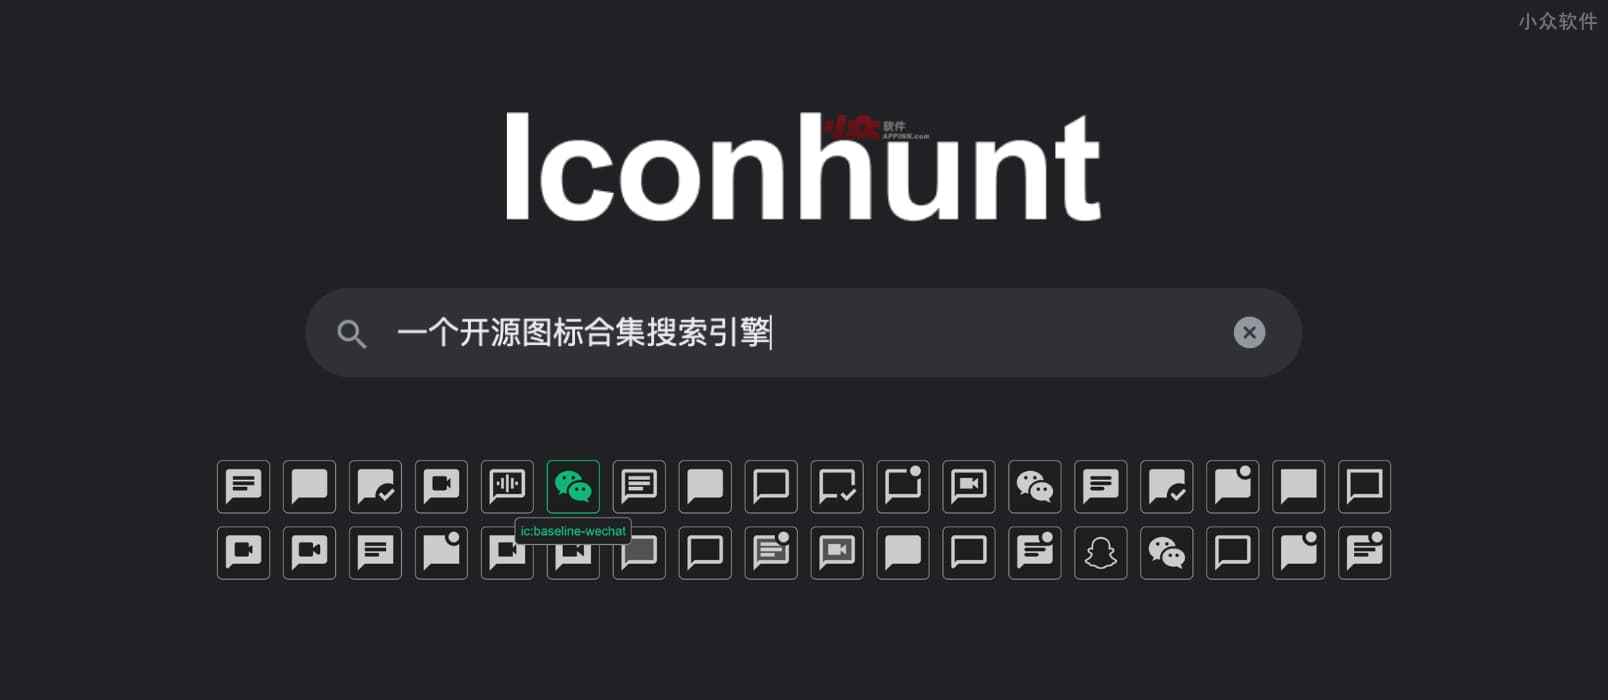 Iconhunt - 15 万张，开源图标合集搜索引擎，可快速复制到 Notion、Figma 等环境 11